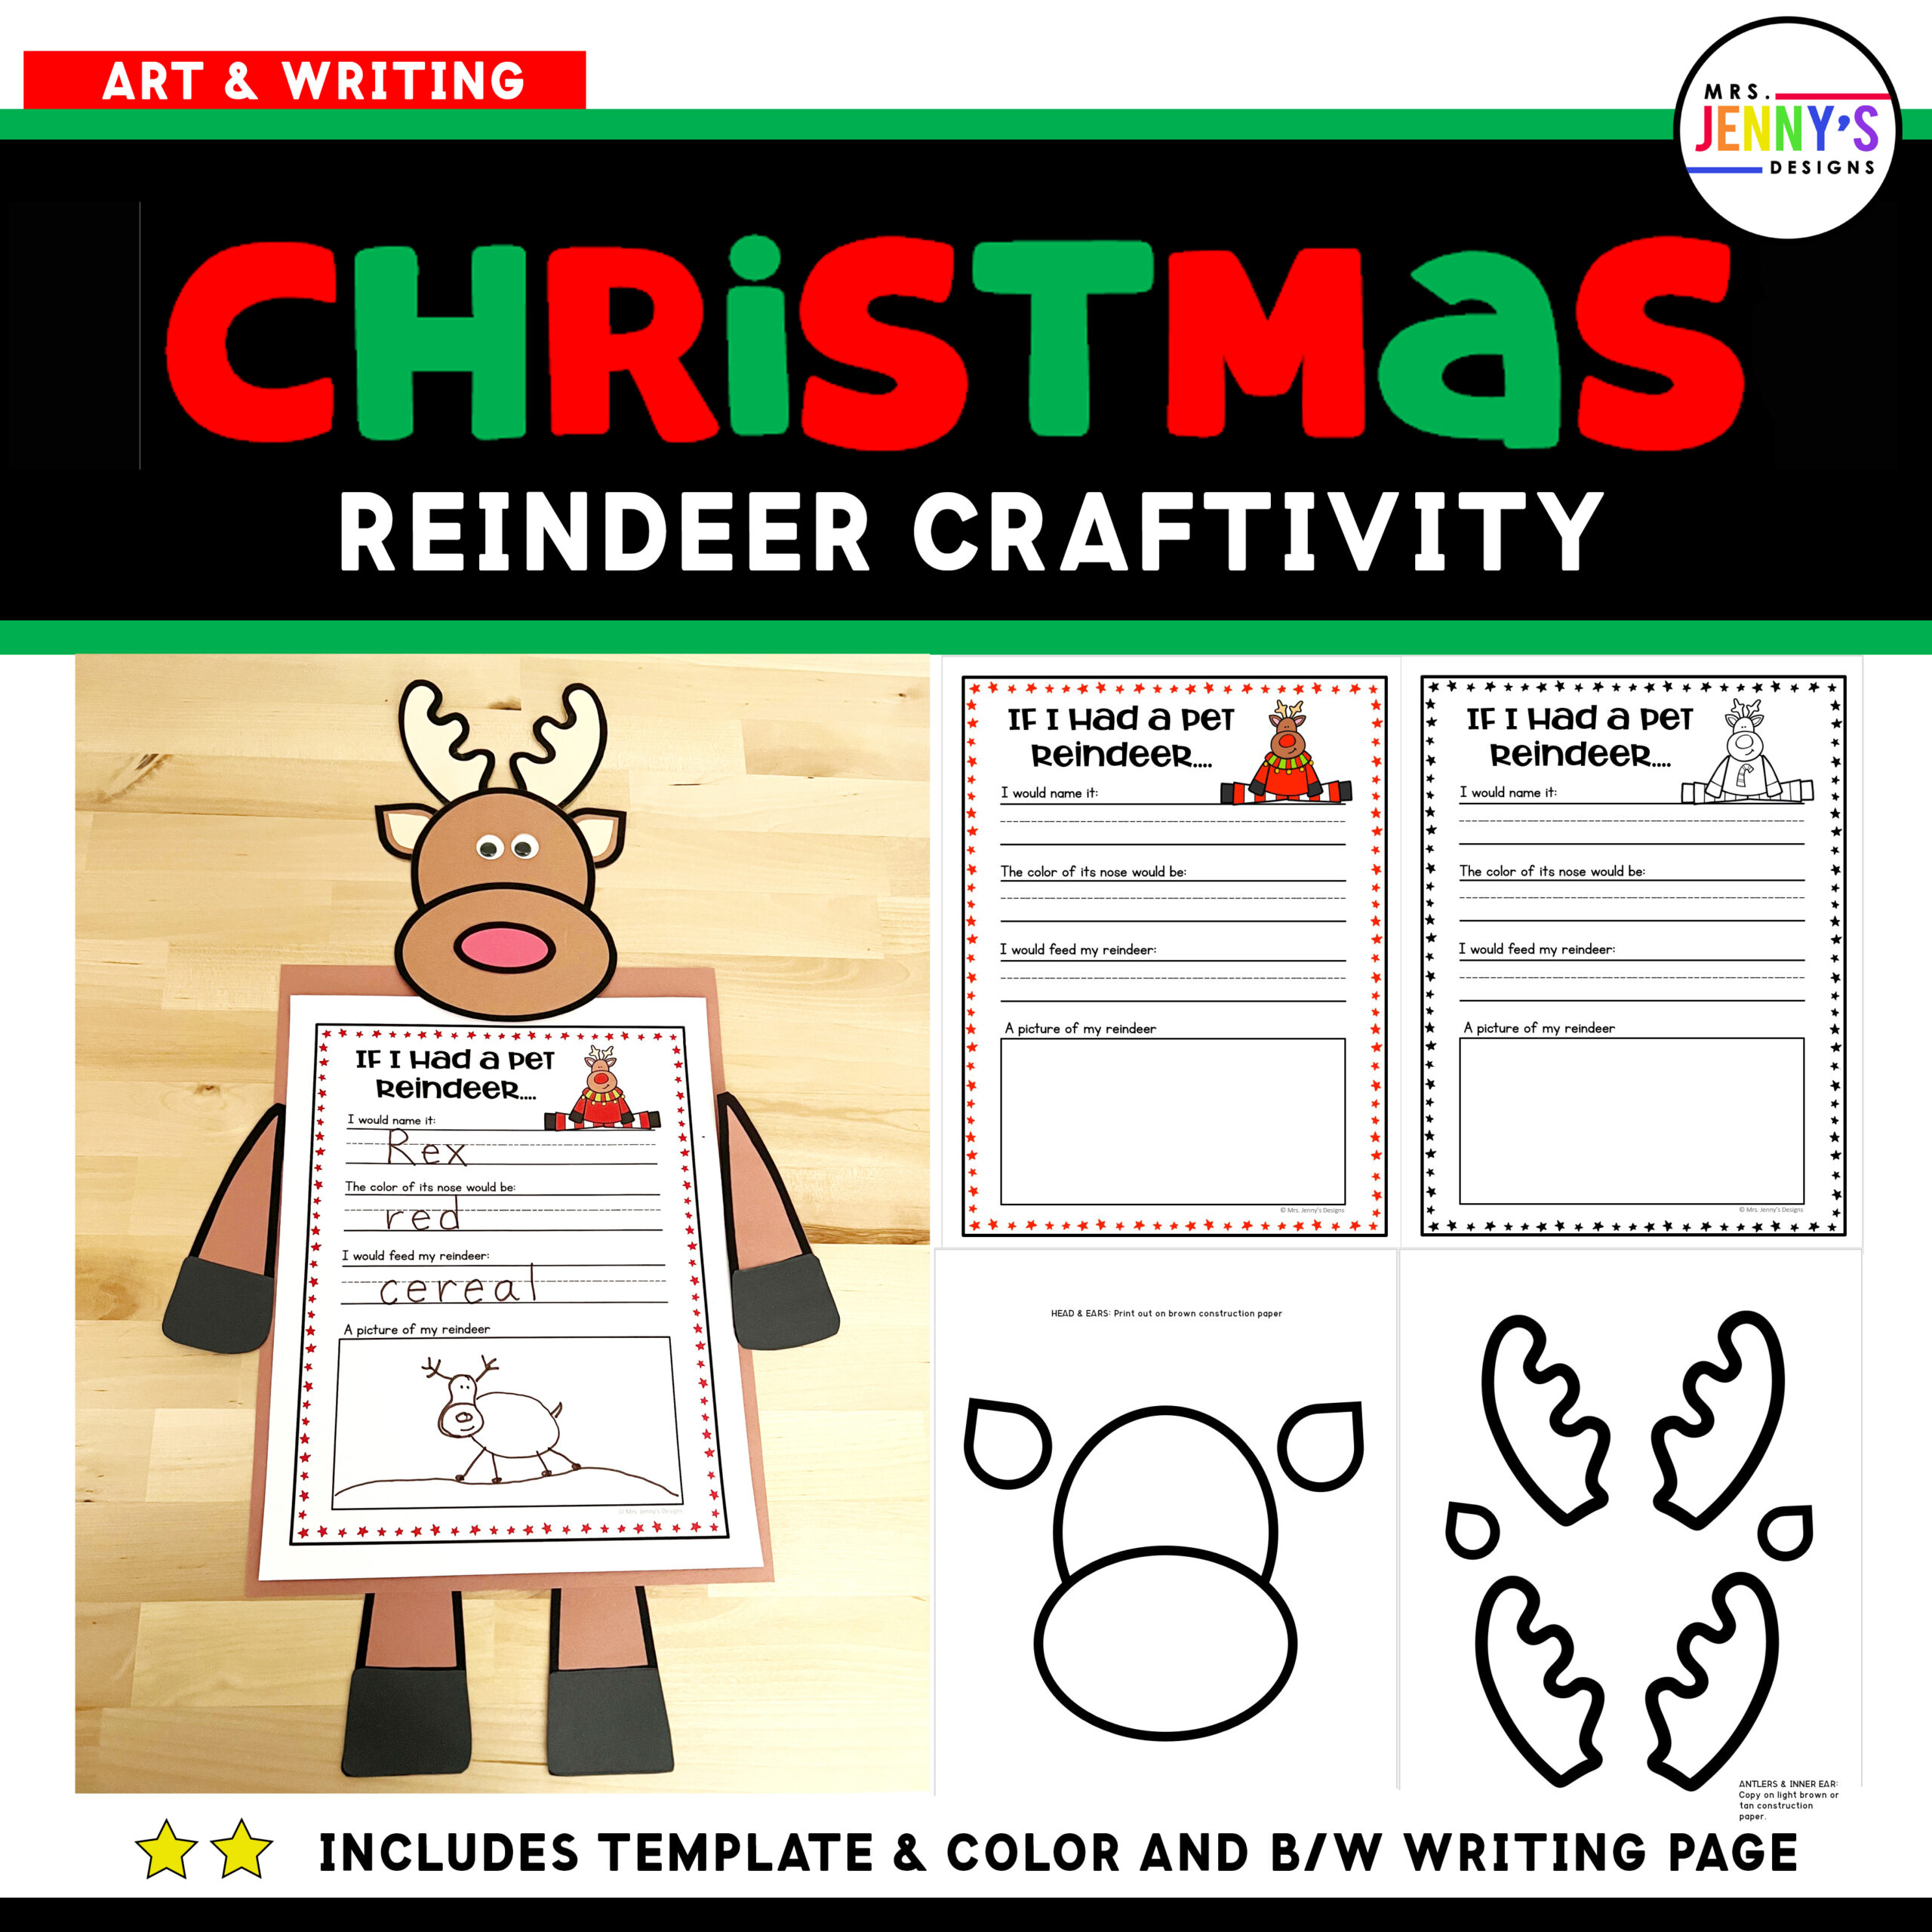 Christmas Pet Reindeer Art Craft and Writing Project Craftivity Activity